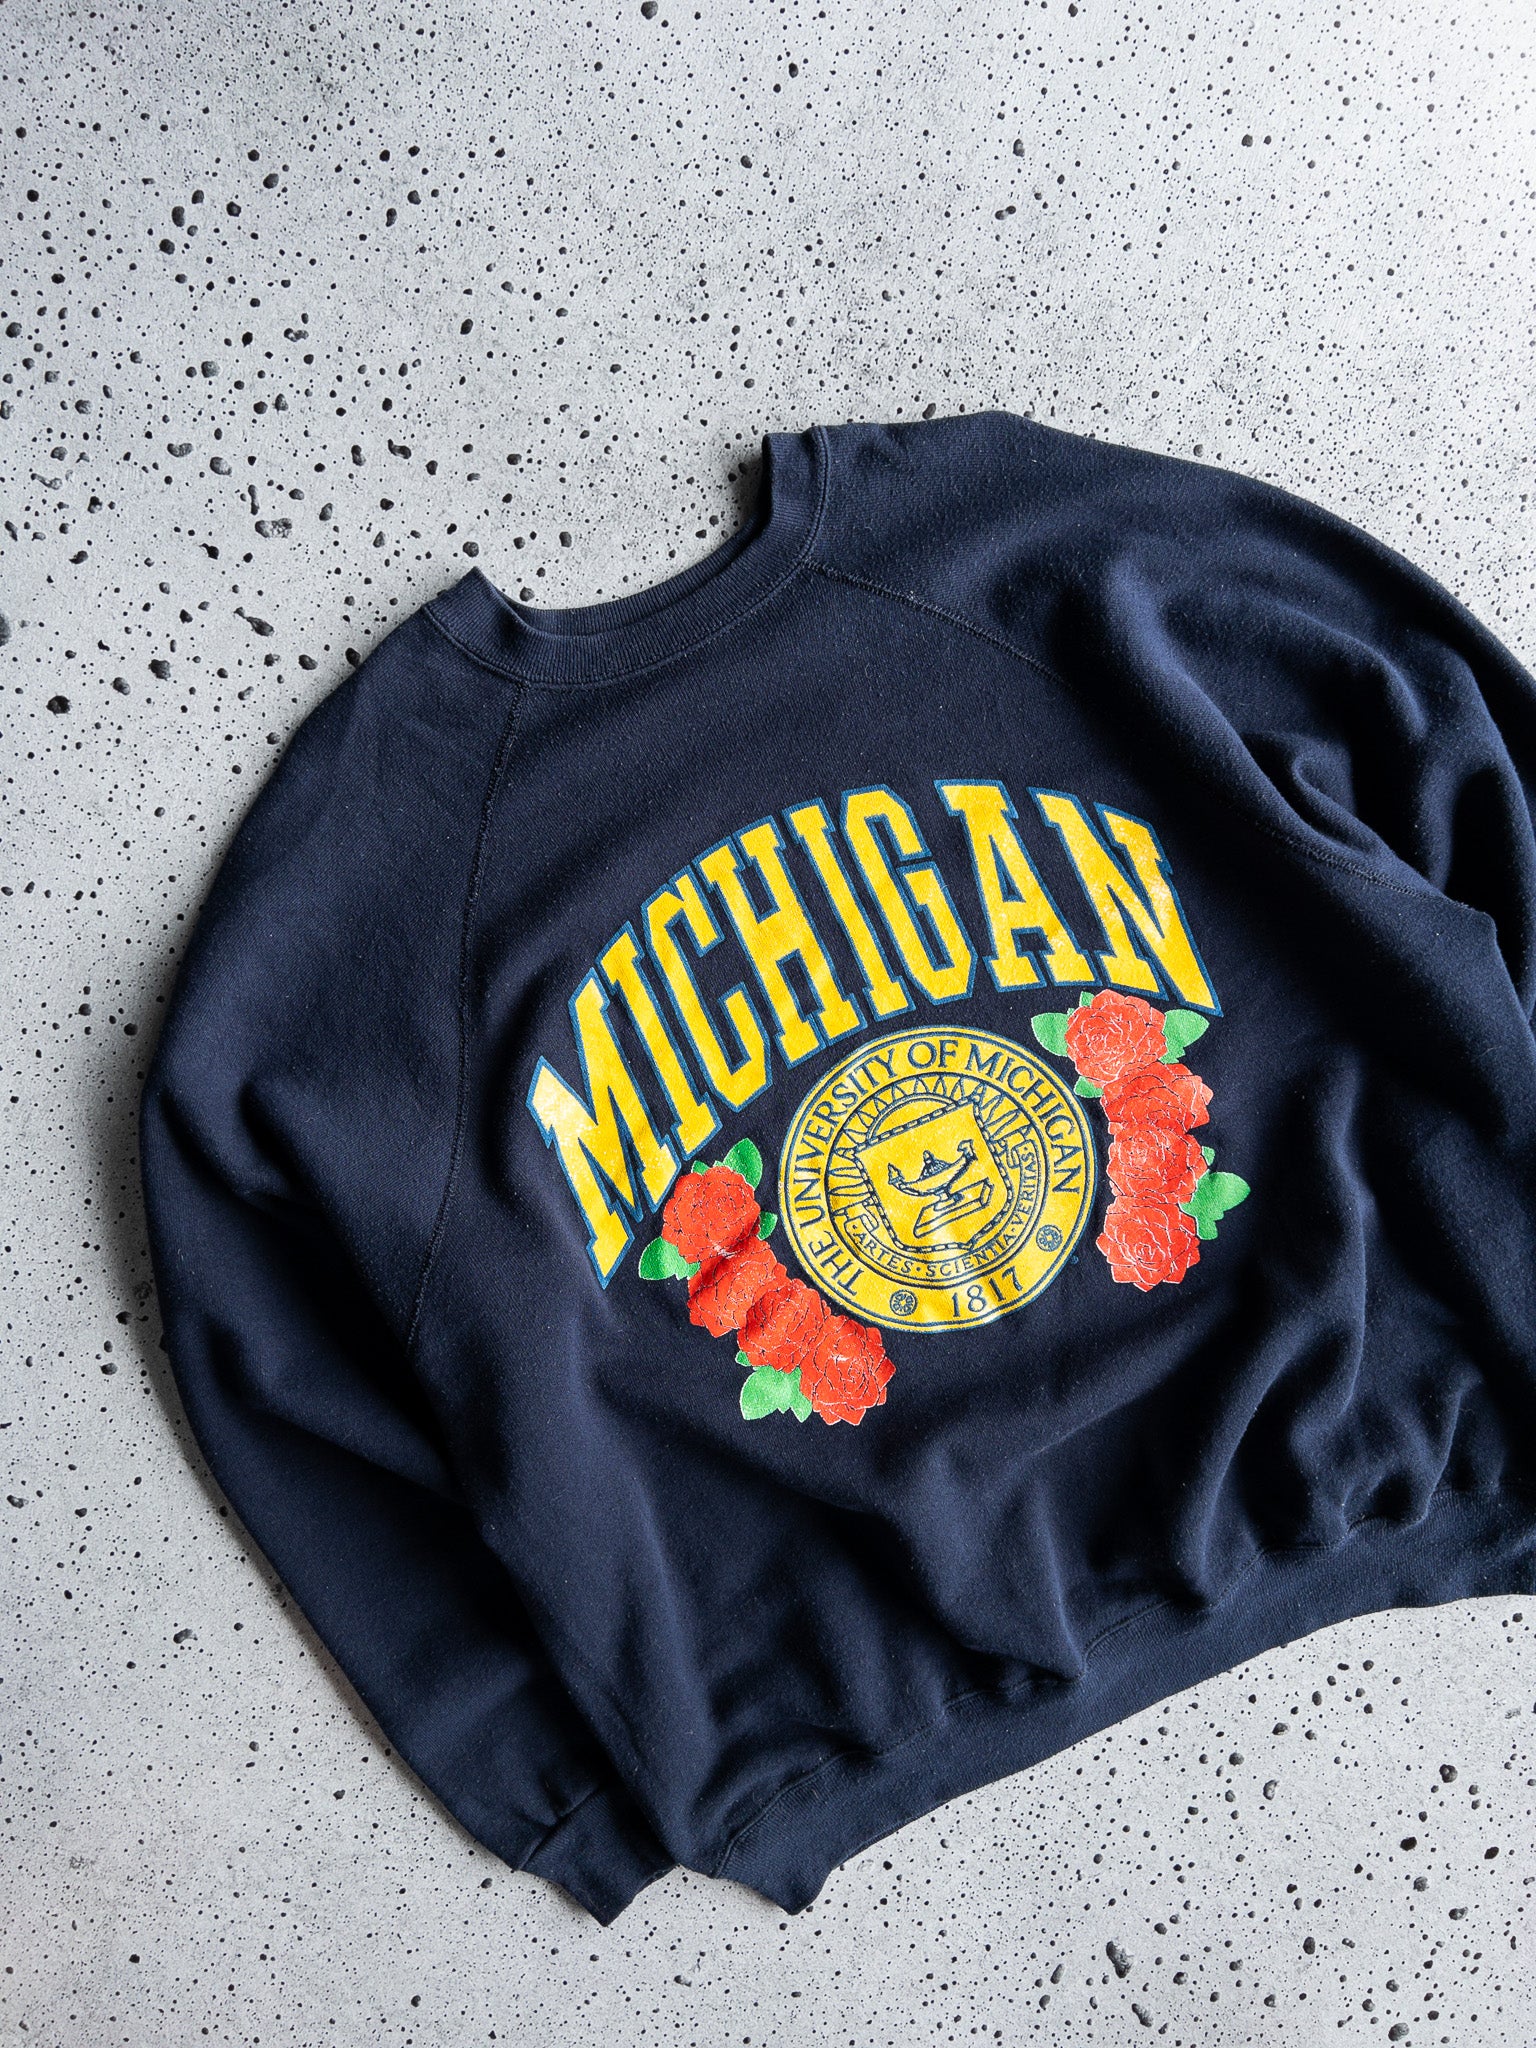 Vintage University of Michigan Sweatshirt (XL)